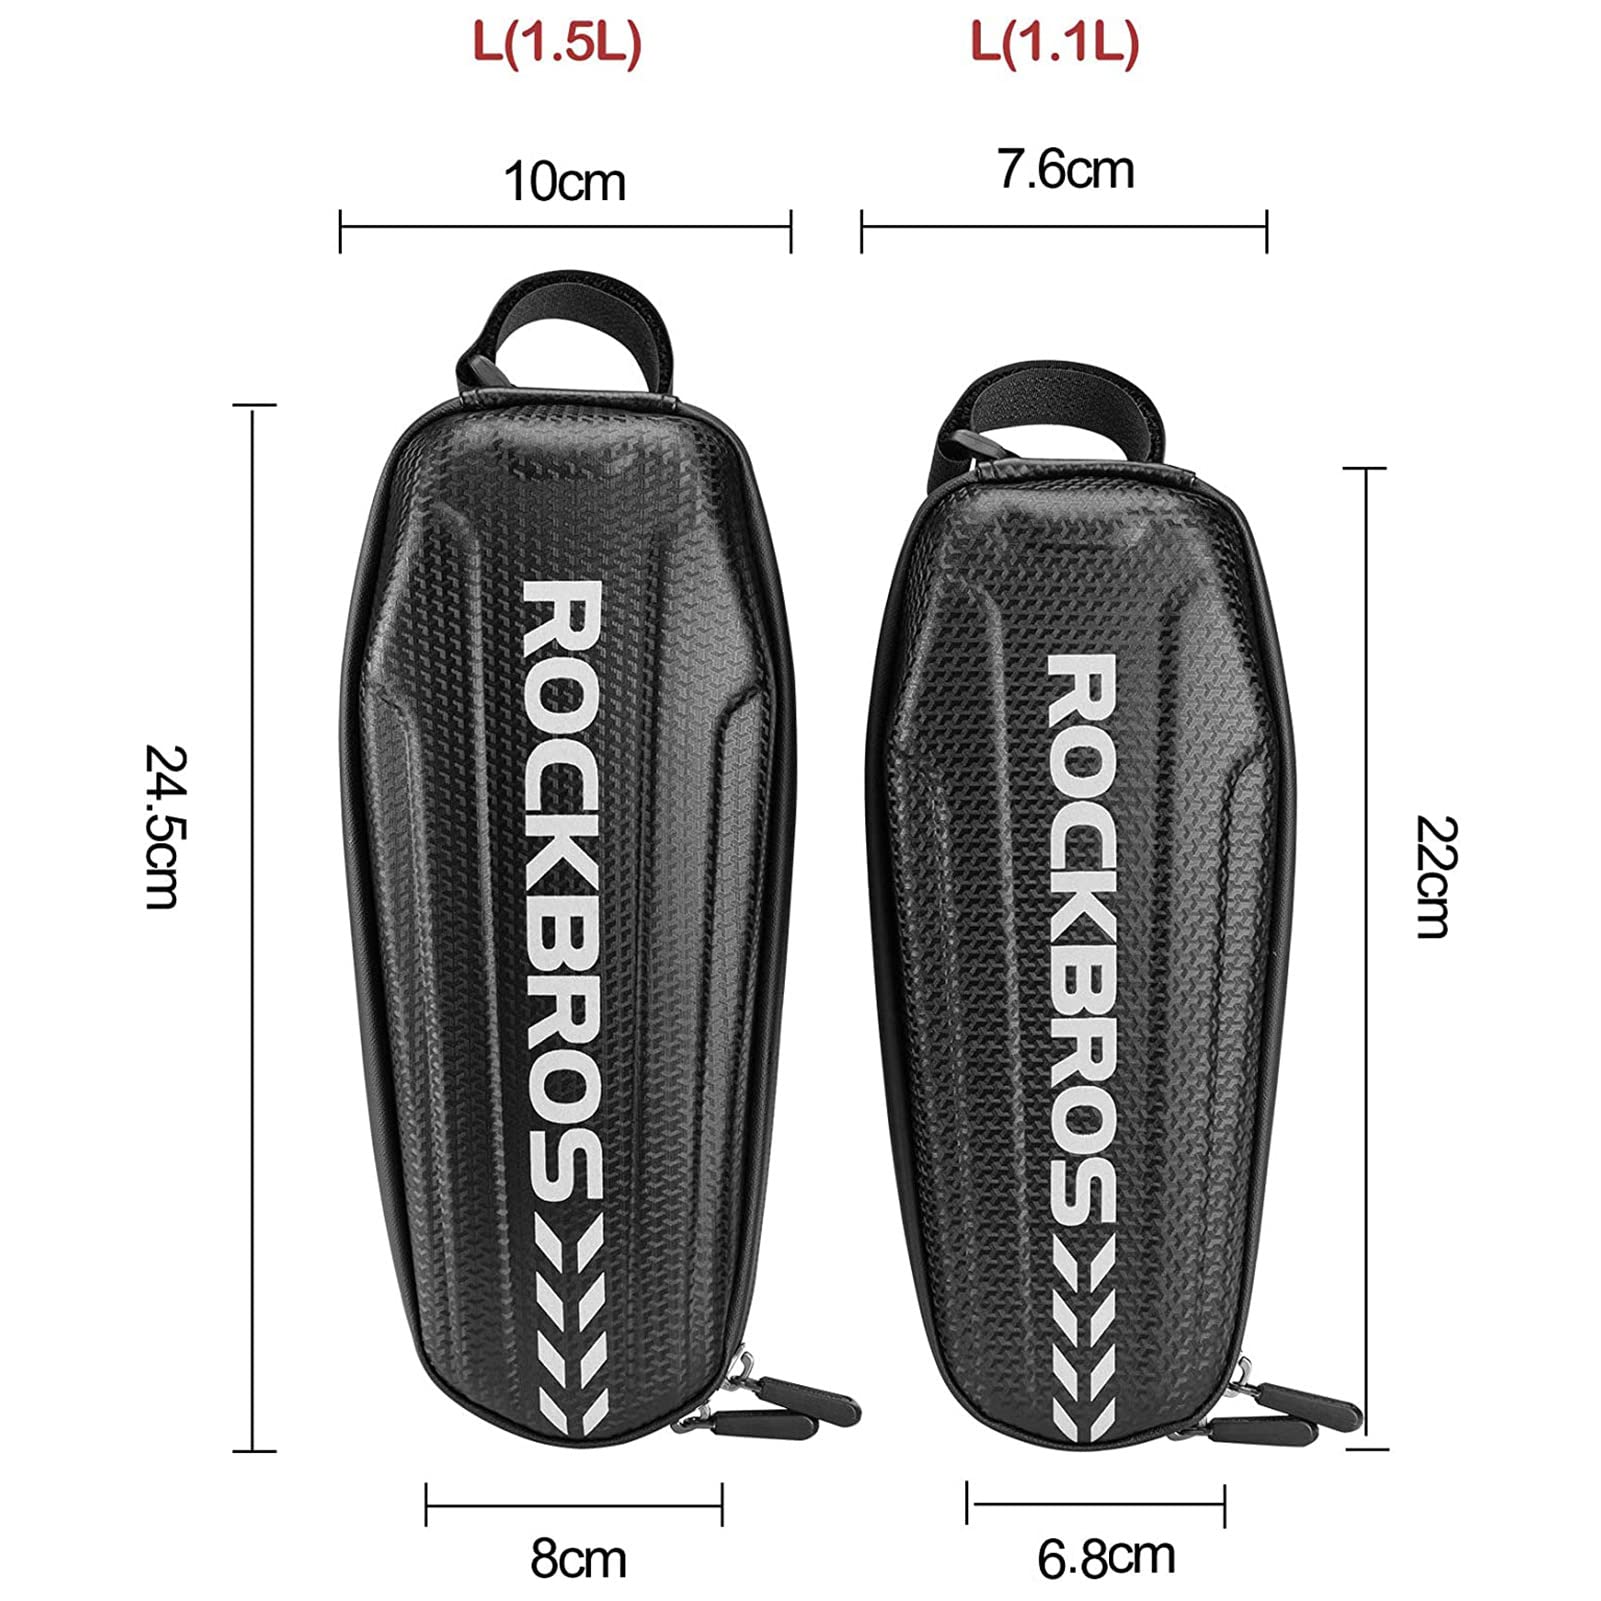 ROCKBROS Top Tube Bike Bag Pouch Storage Pack Waterproof Bike Frame Bag